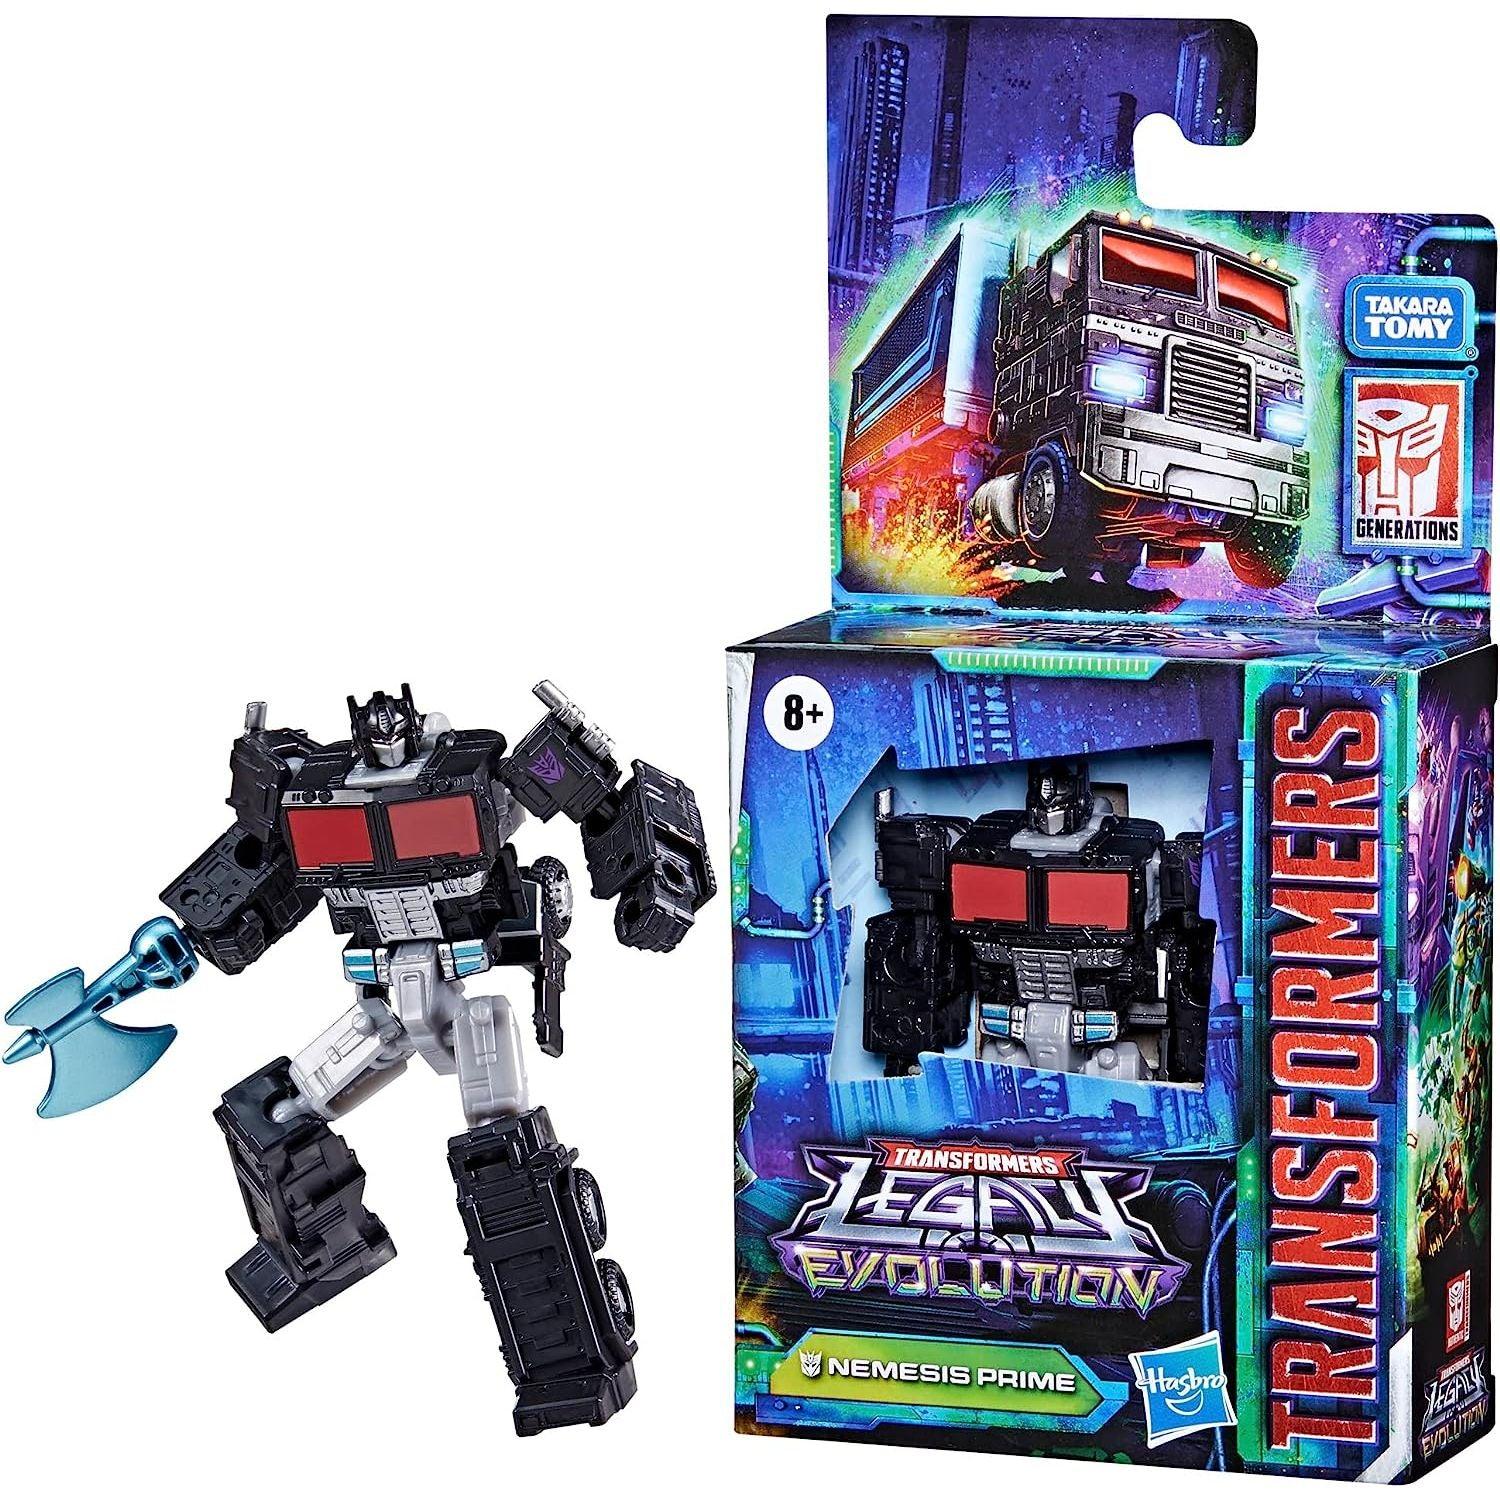 Transformers Toys Legacy Evolution Core Nemesis Prime Toy, 3.5-inch, Action Figure